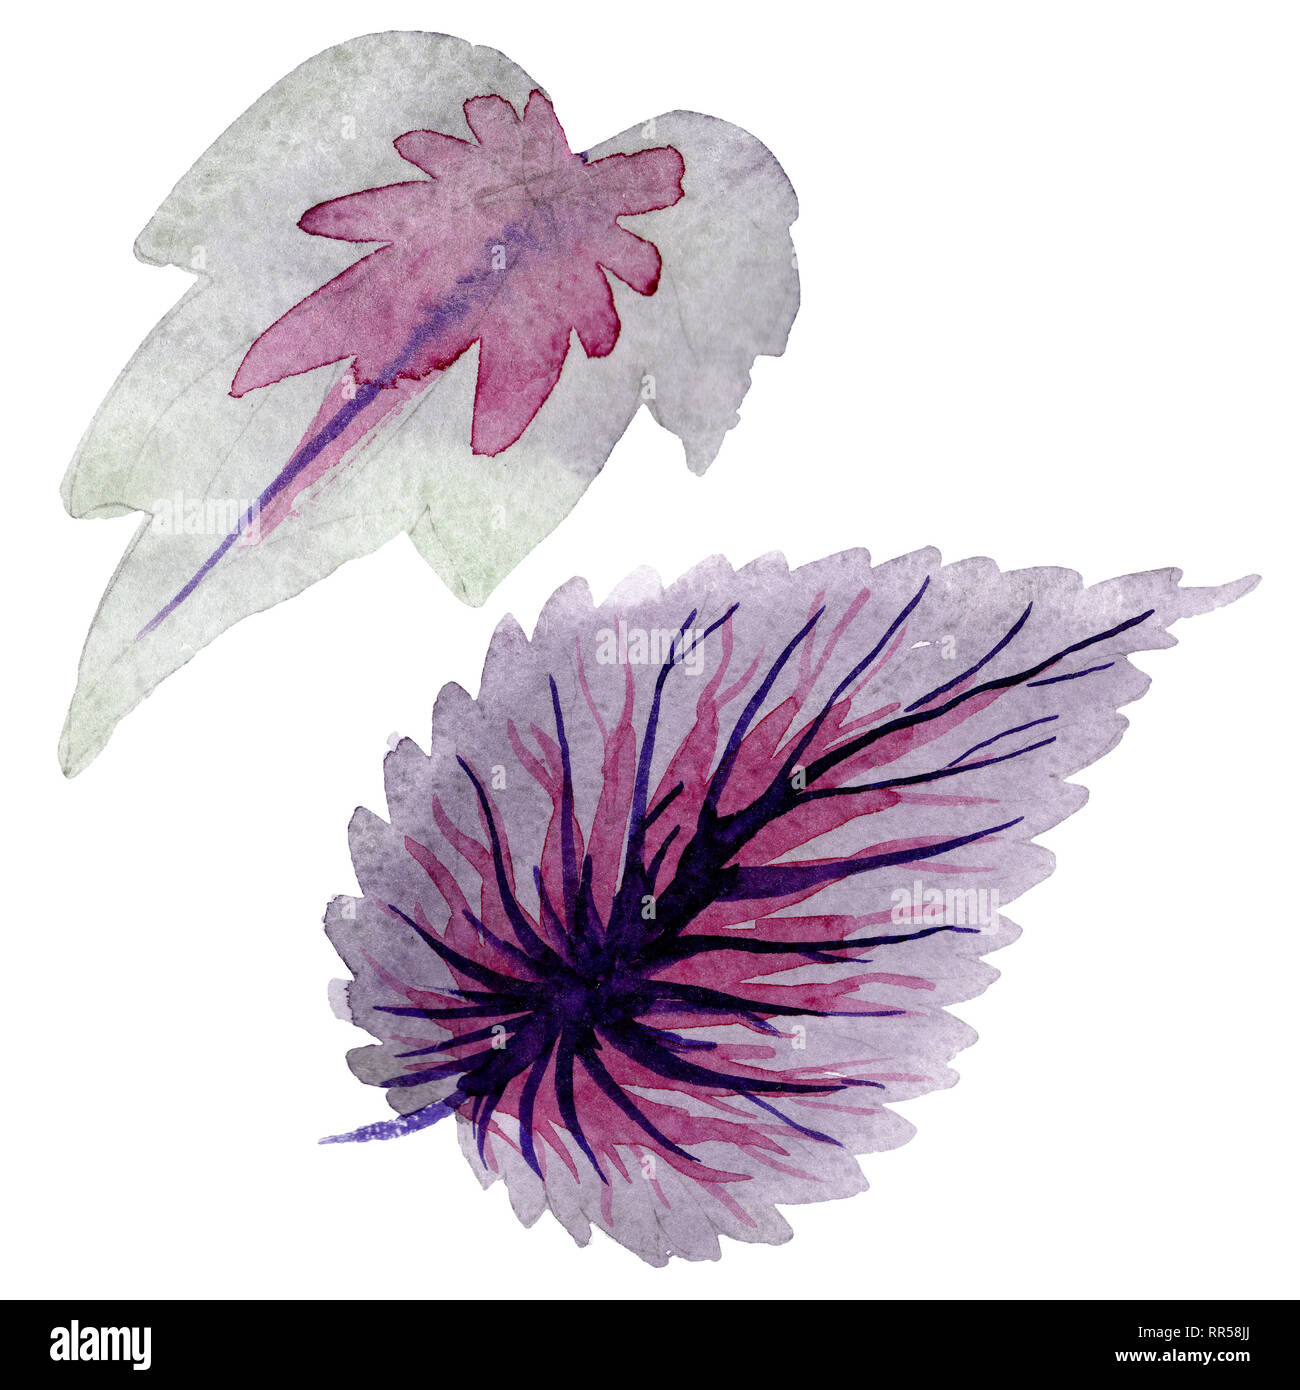 Begonia e -Fotos und -Bildmaterial in hoher Auflösung – Alamy